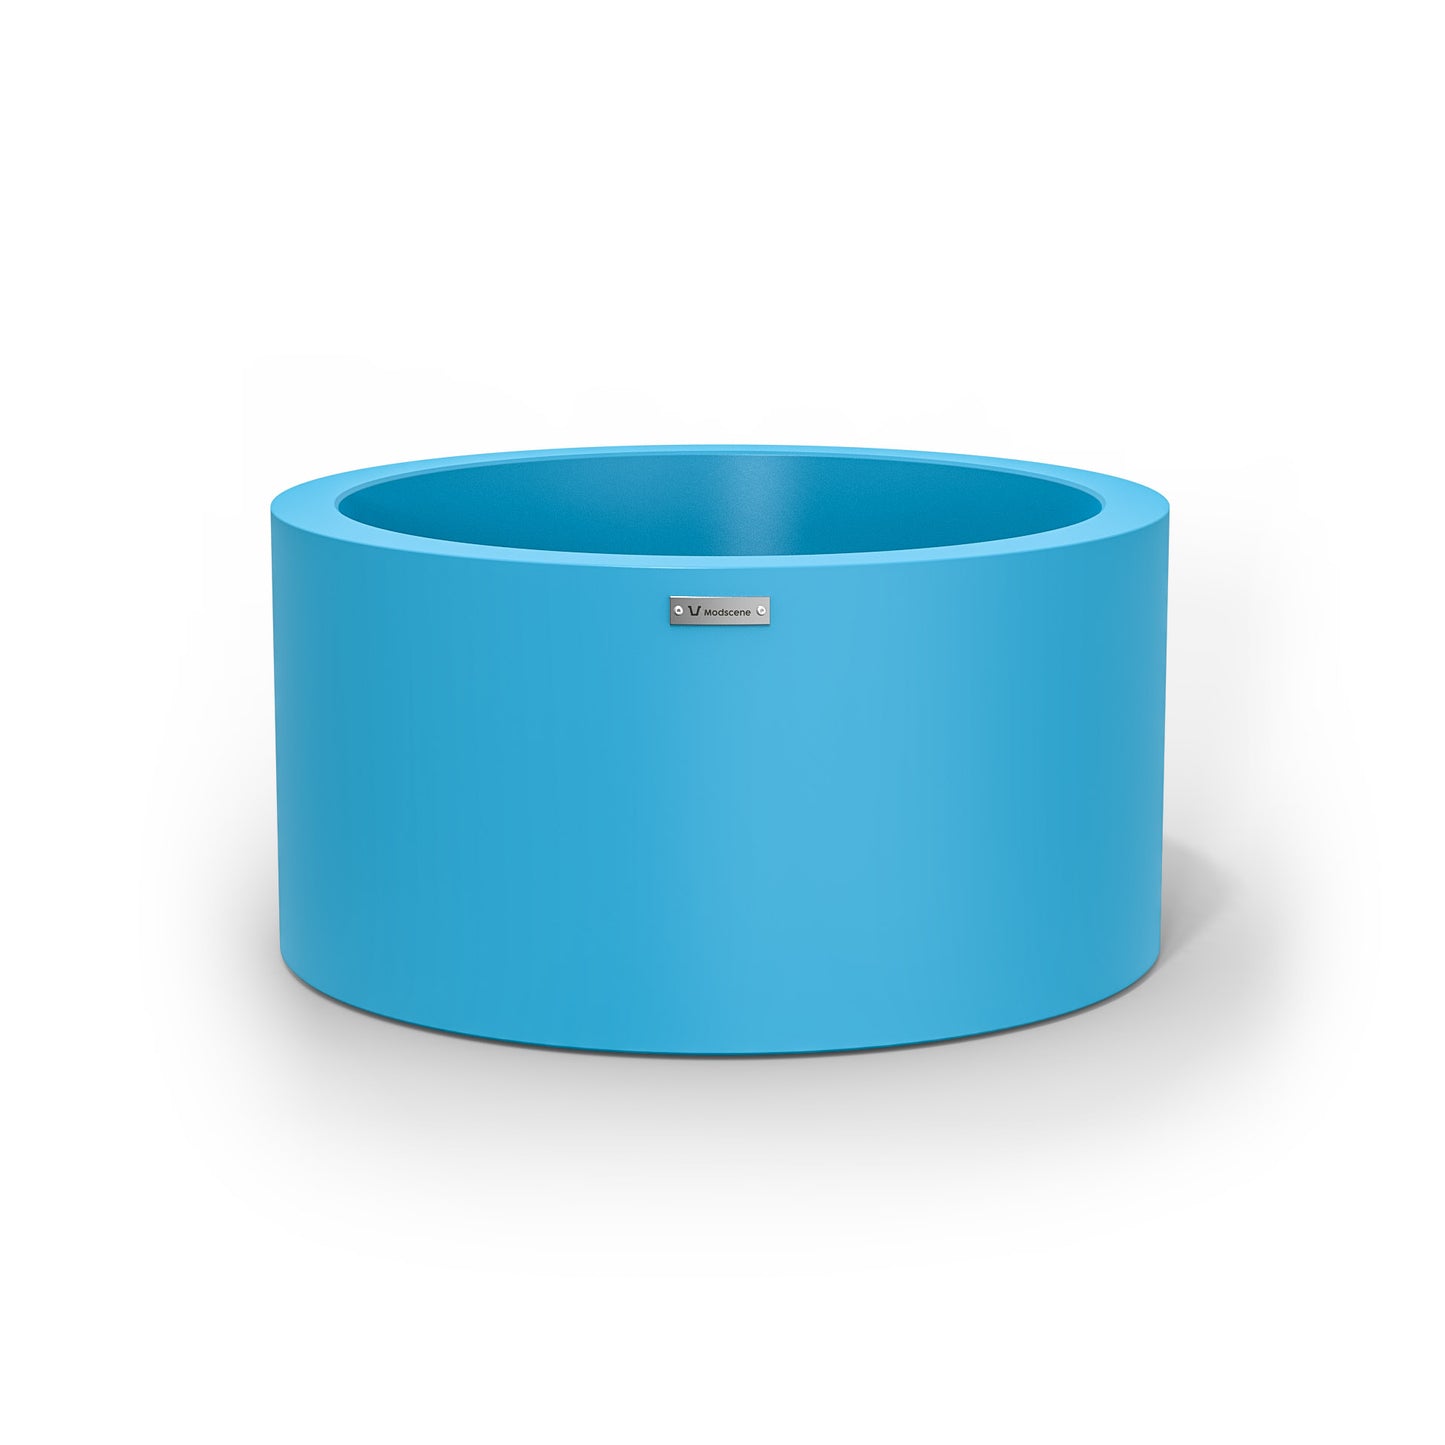 A blue cylinder pot planter made by Modscene.